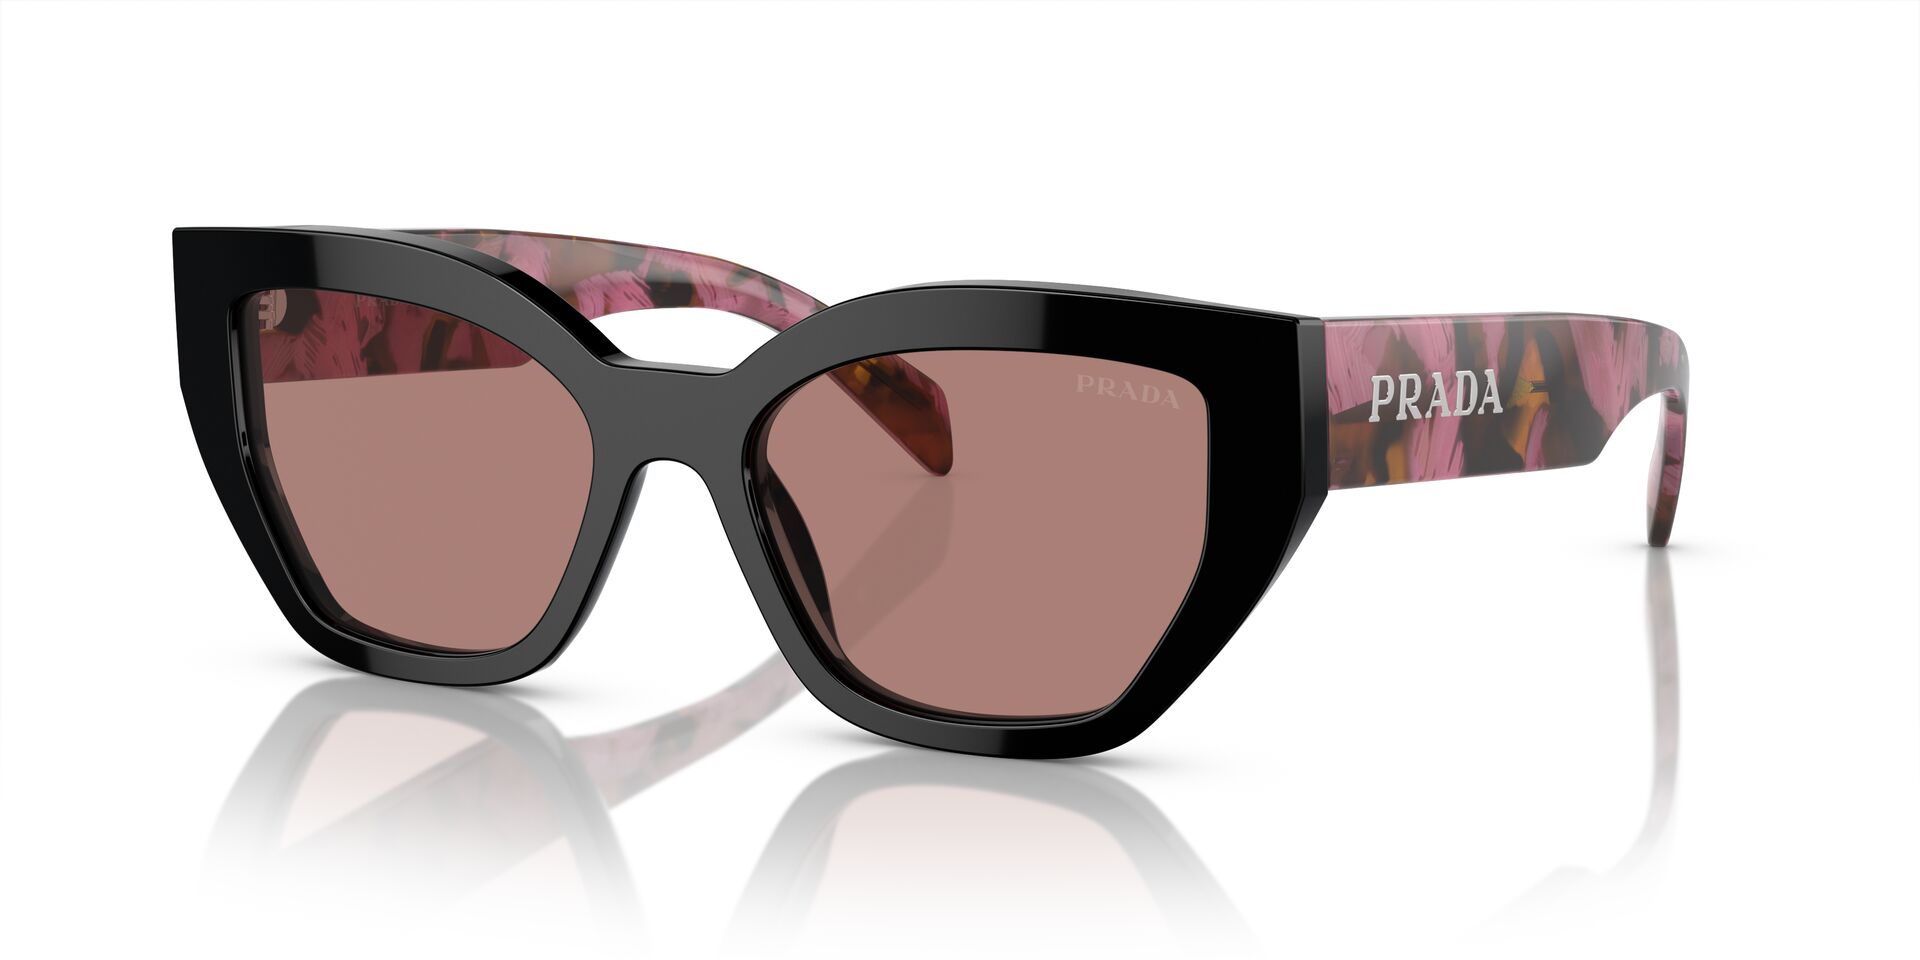 Prada SPR A09 Butterfly Sunglasses | Fashion Eyewear UK